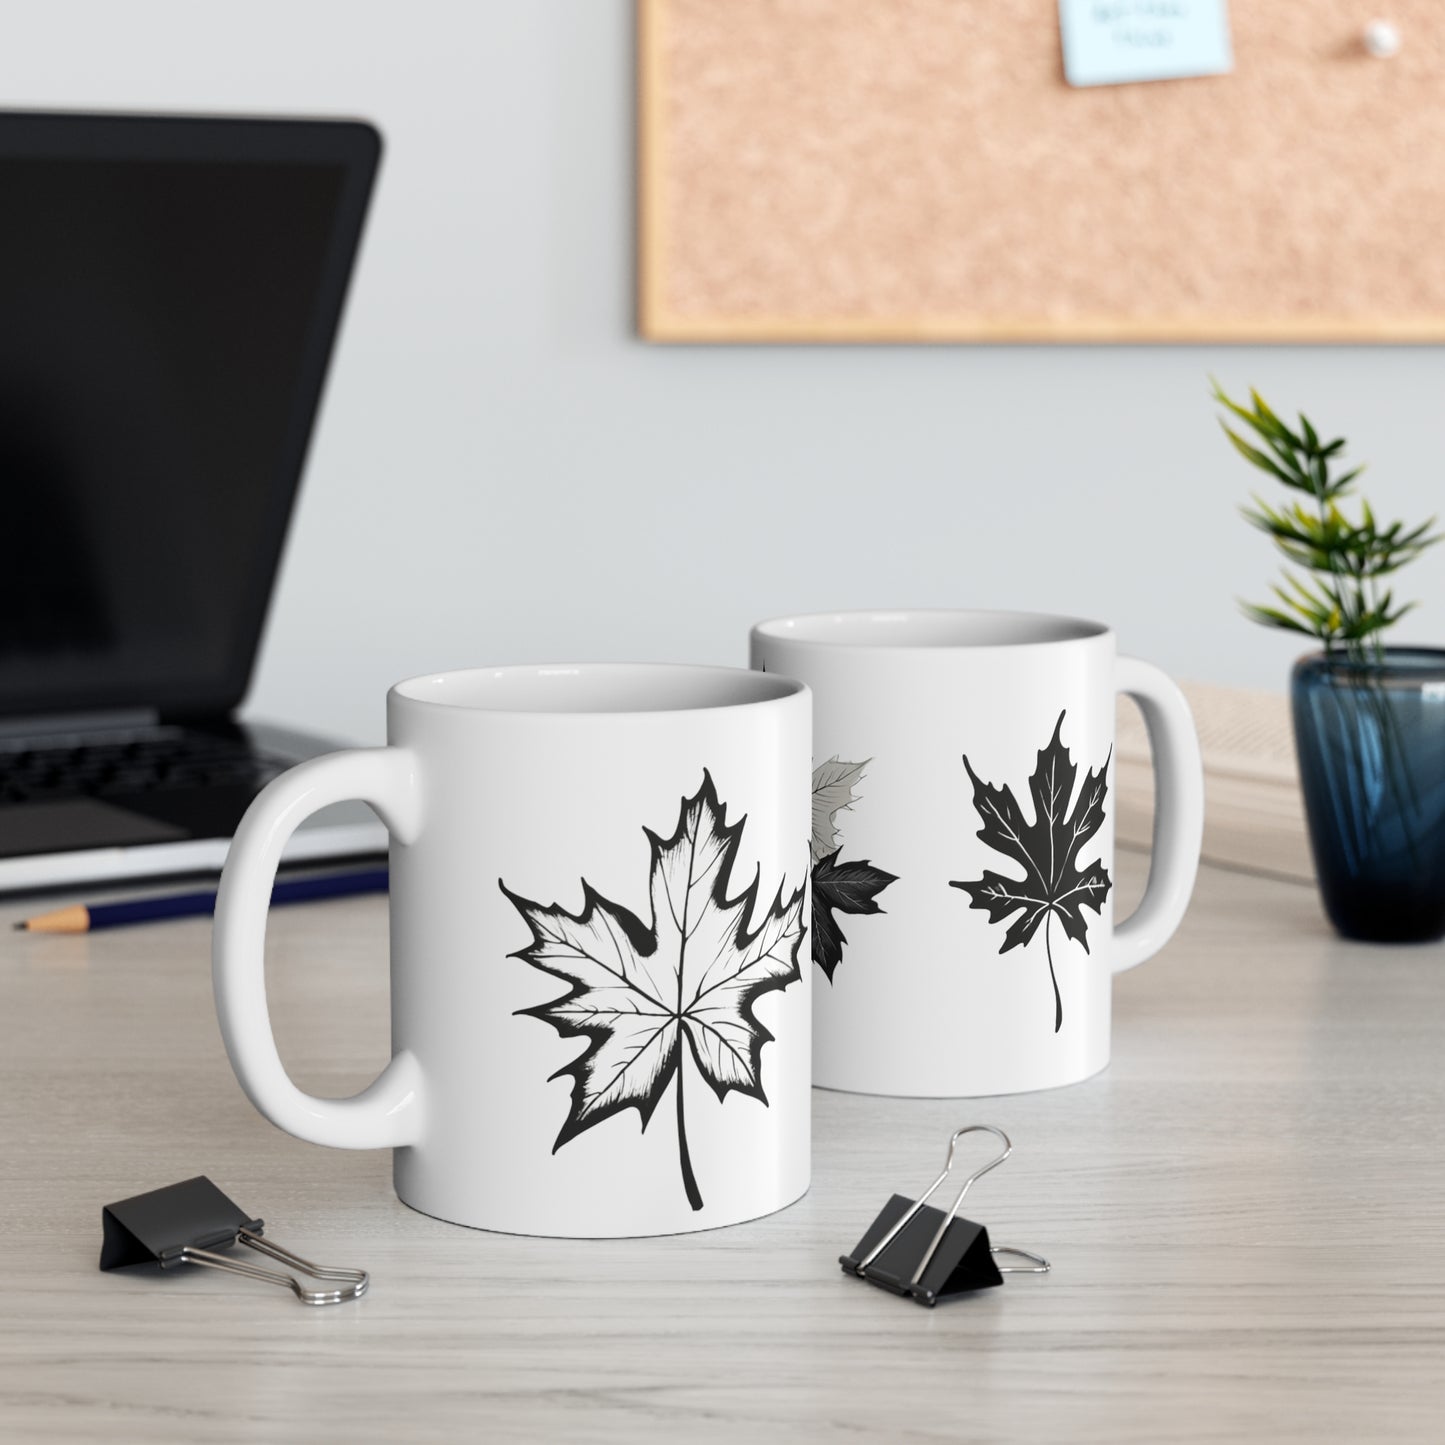 Black and White Maple Leaf Mug - Ceramic Coffee Mug 11oz